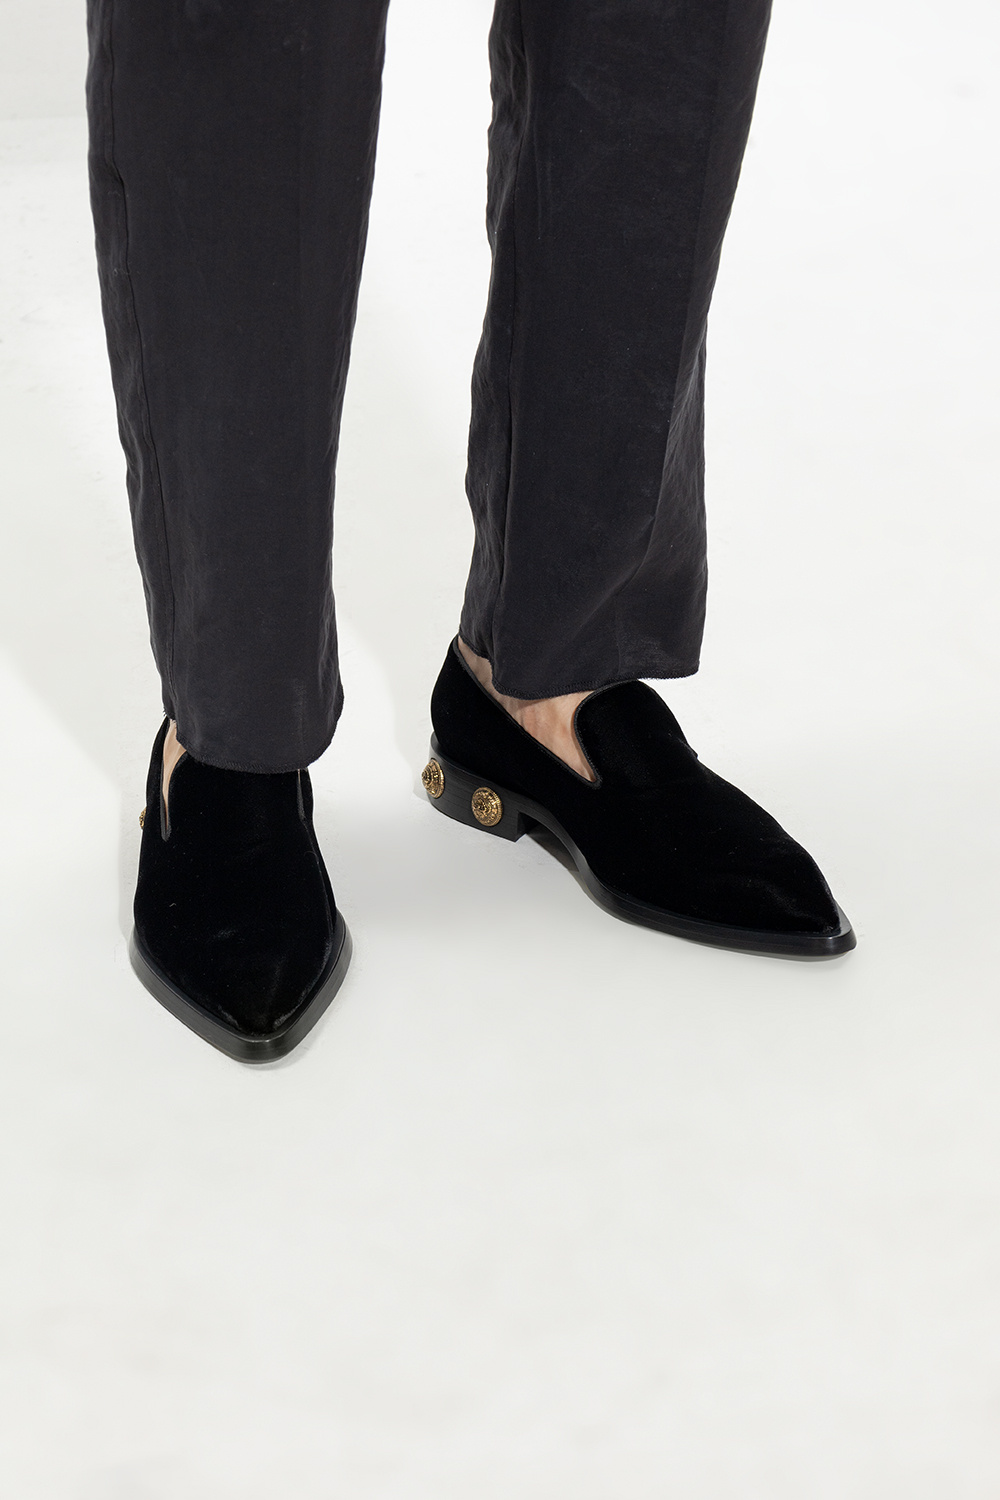 Zendaya Slips on Loafers & Louis Vuitton x Yayoi Kusama Bag in